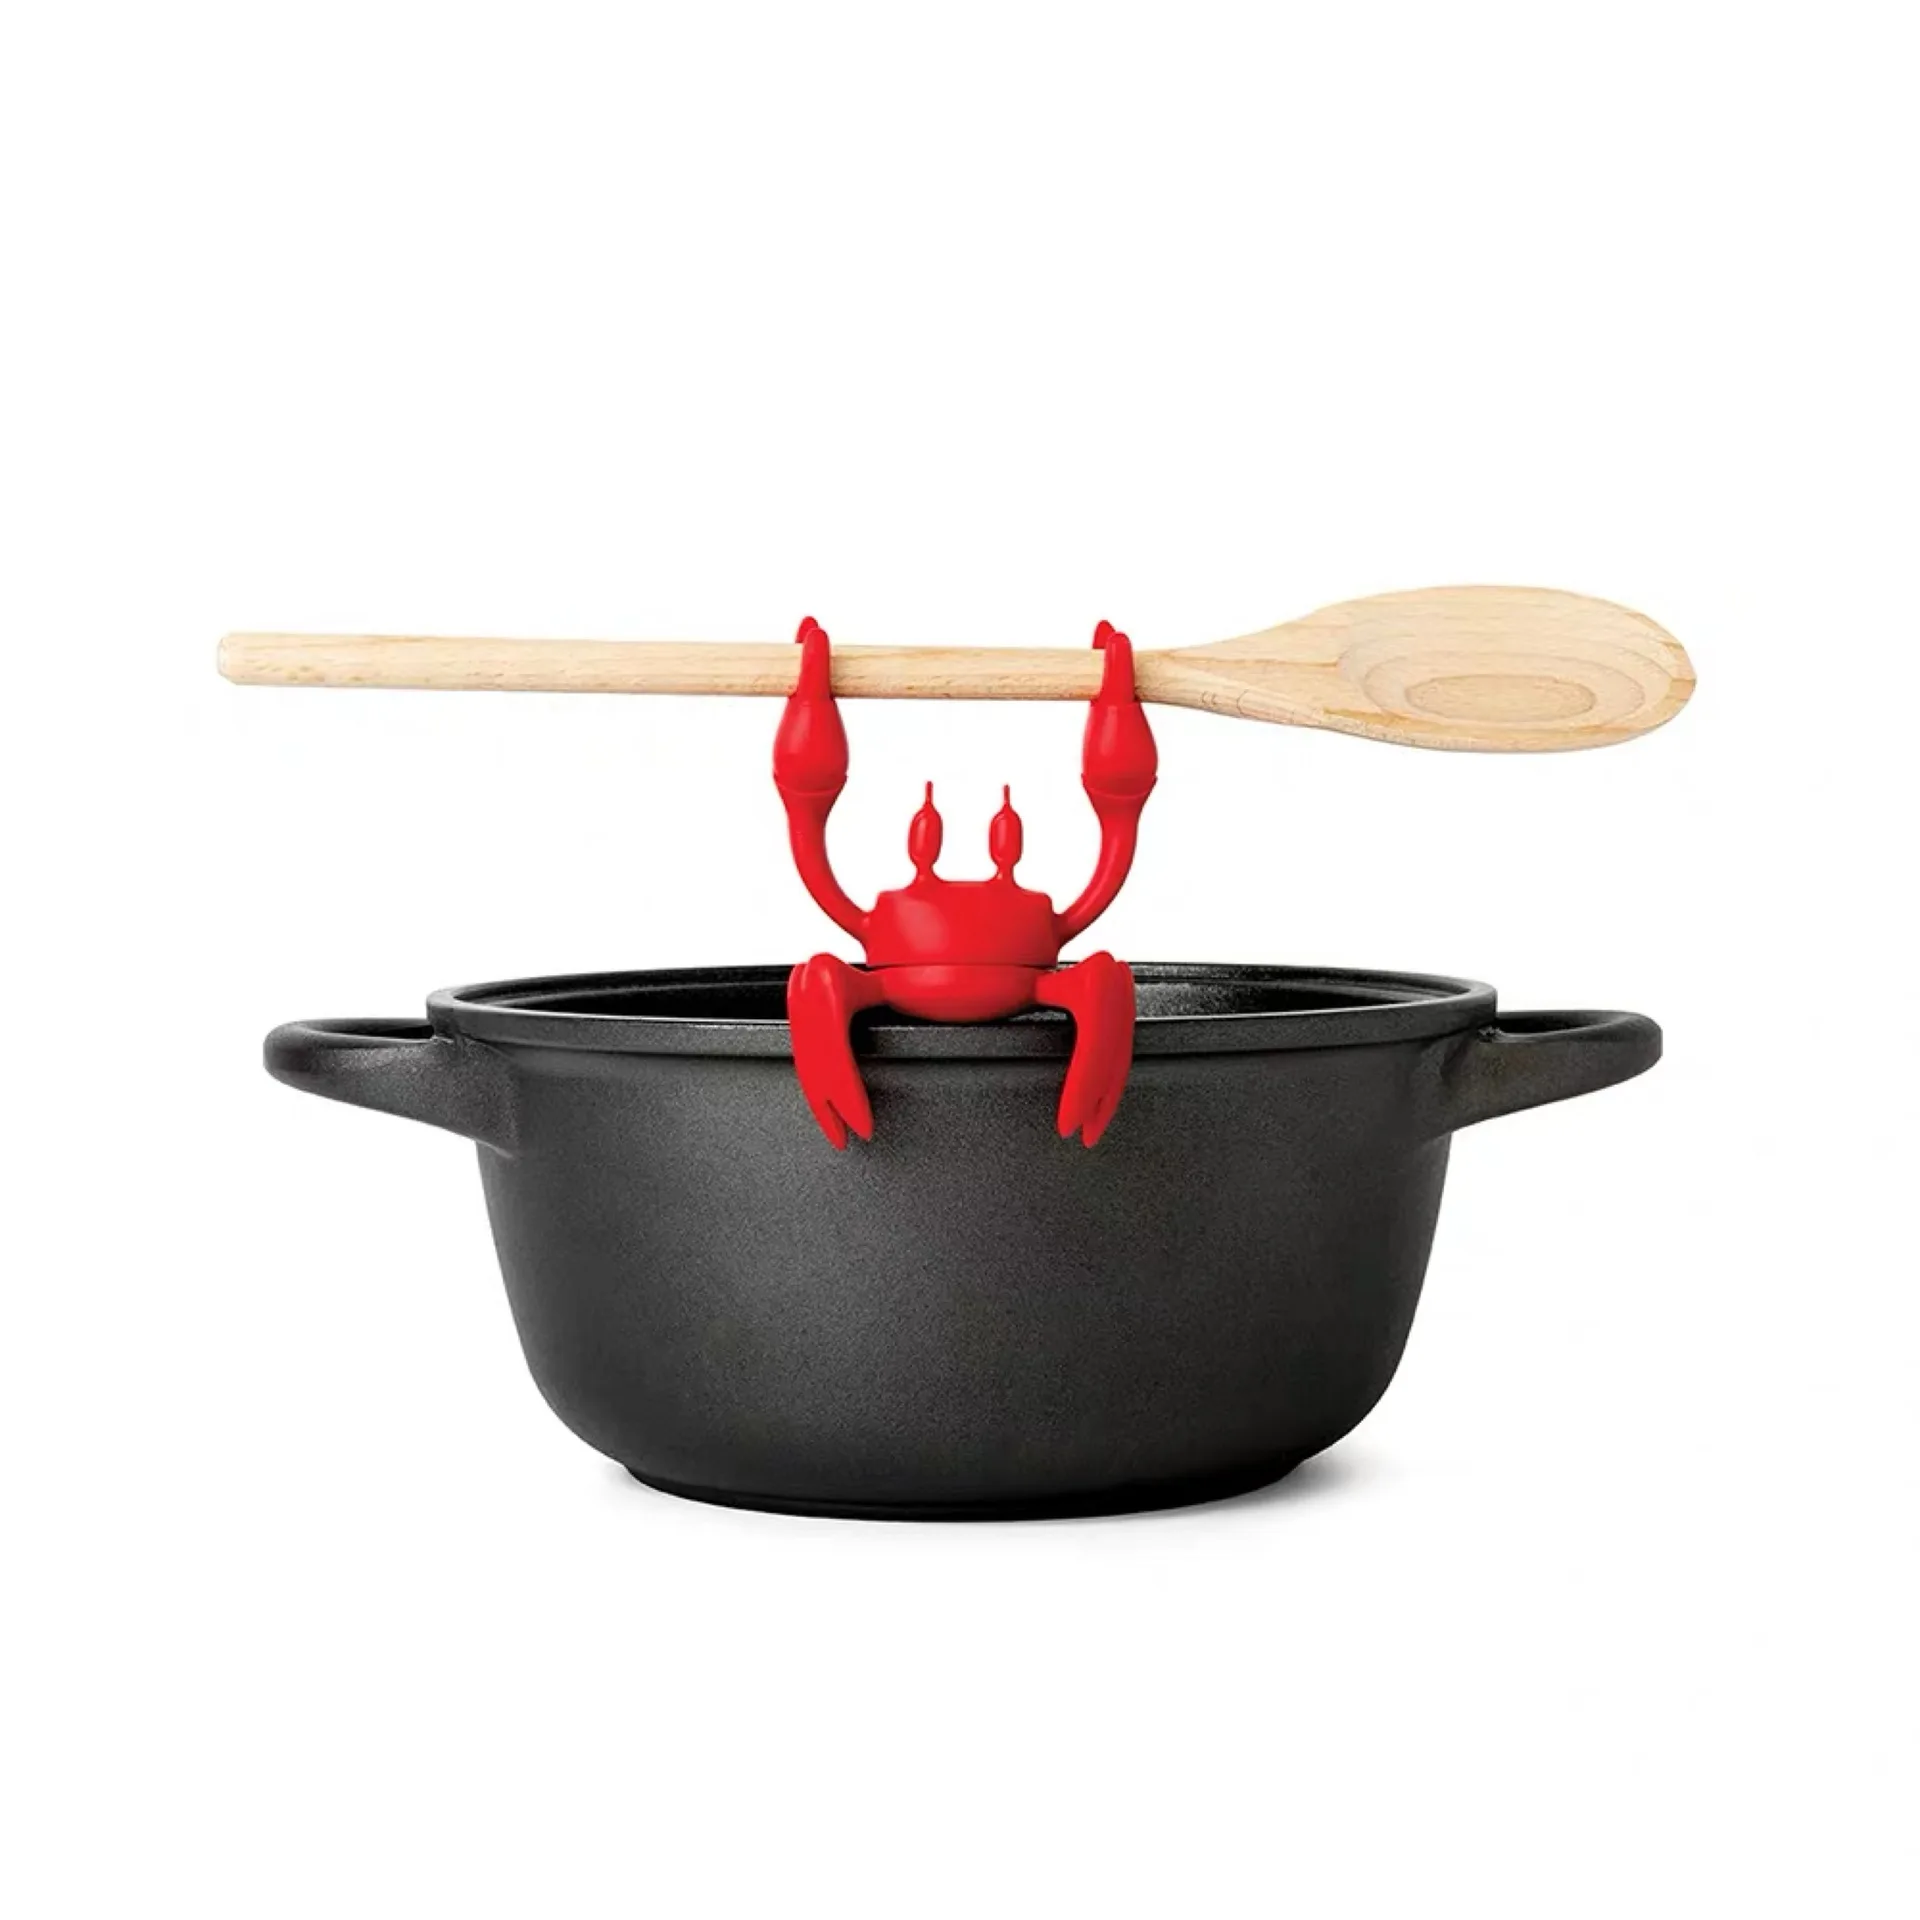 WONDERFUL BPA Free Non-slip Spoon Rest Heat-resistant Kitchen Utensil Holder Red The Crab Silicone Utensil Rest Steam Releaser